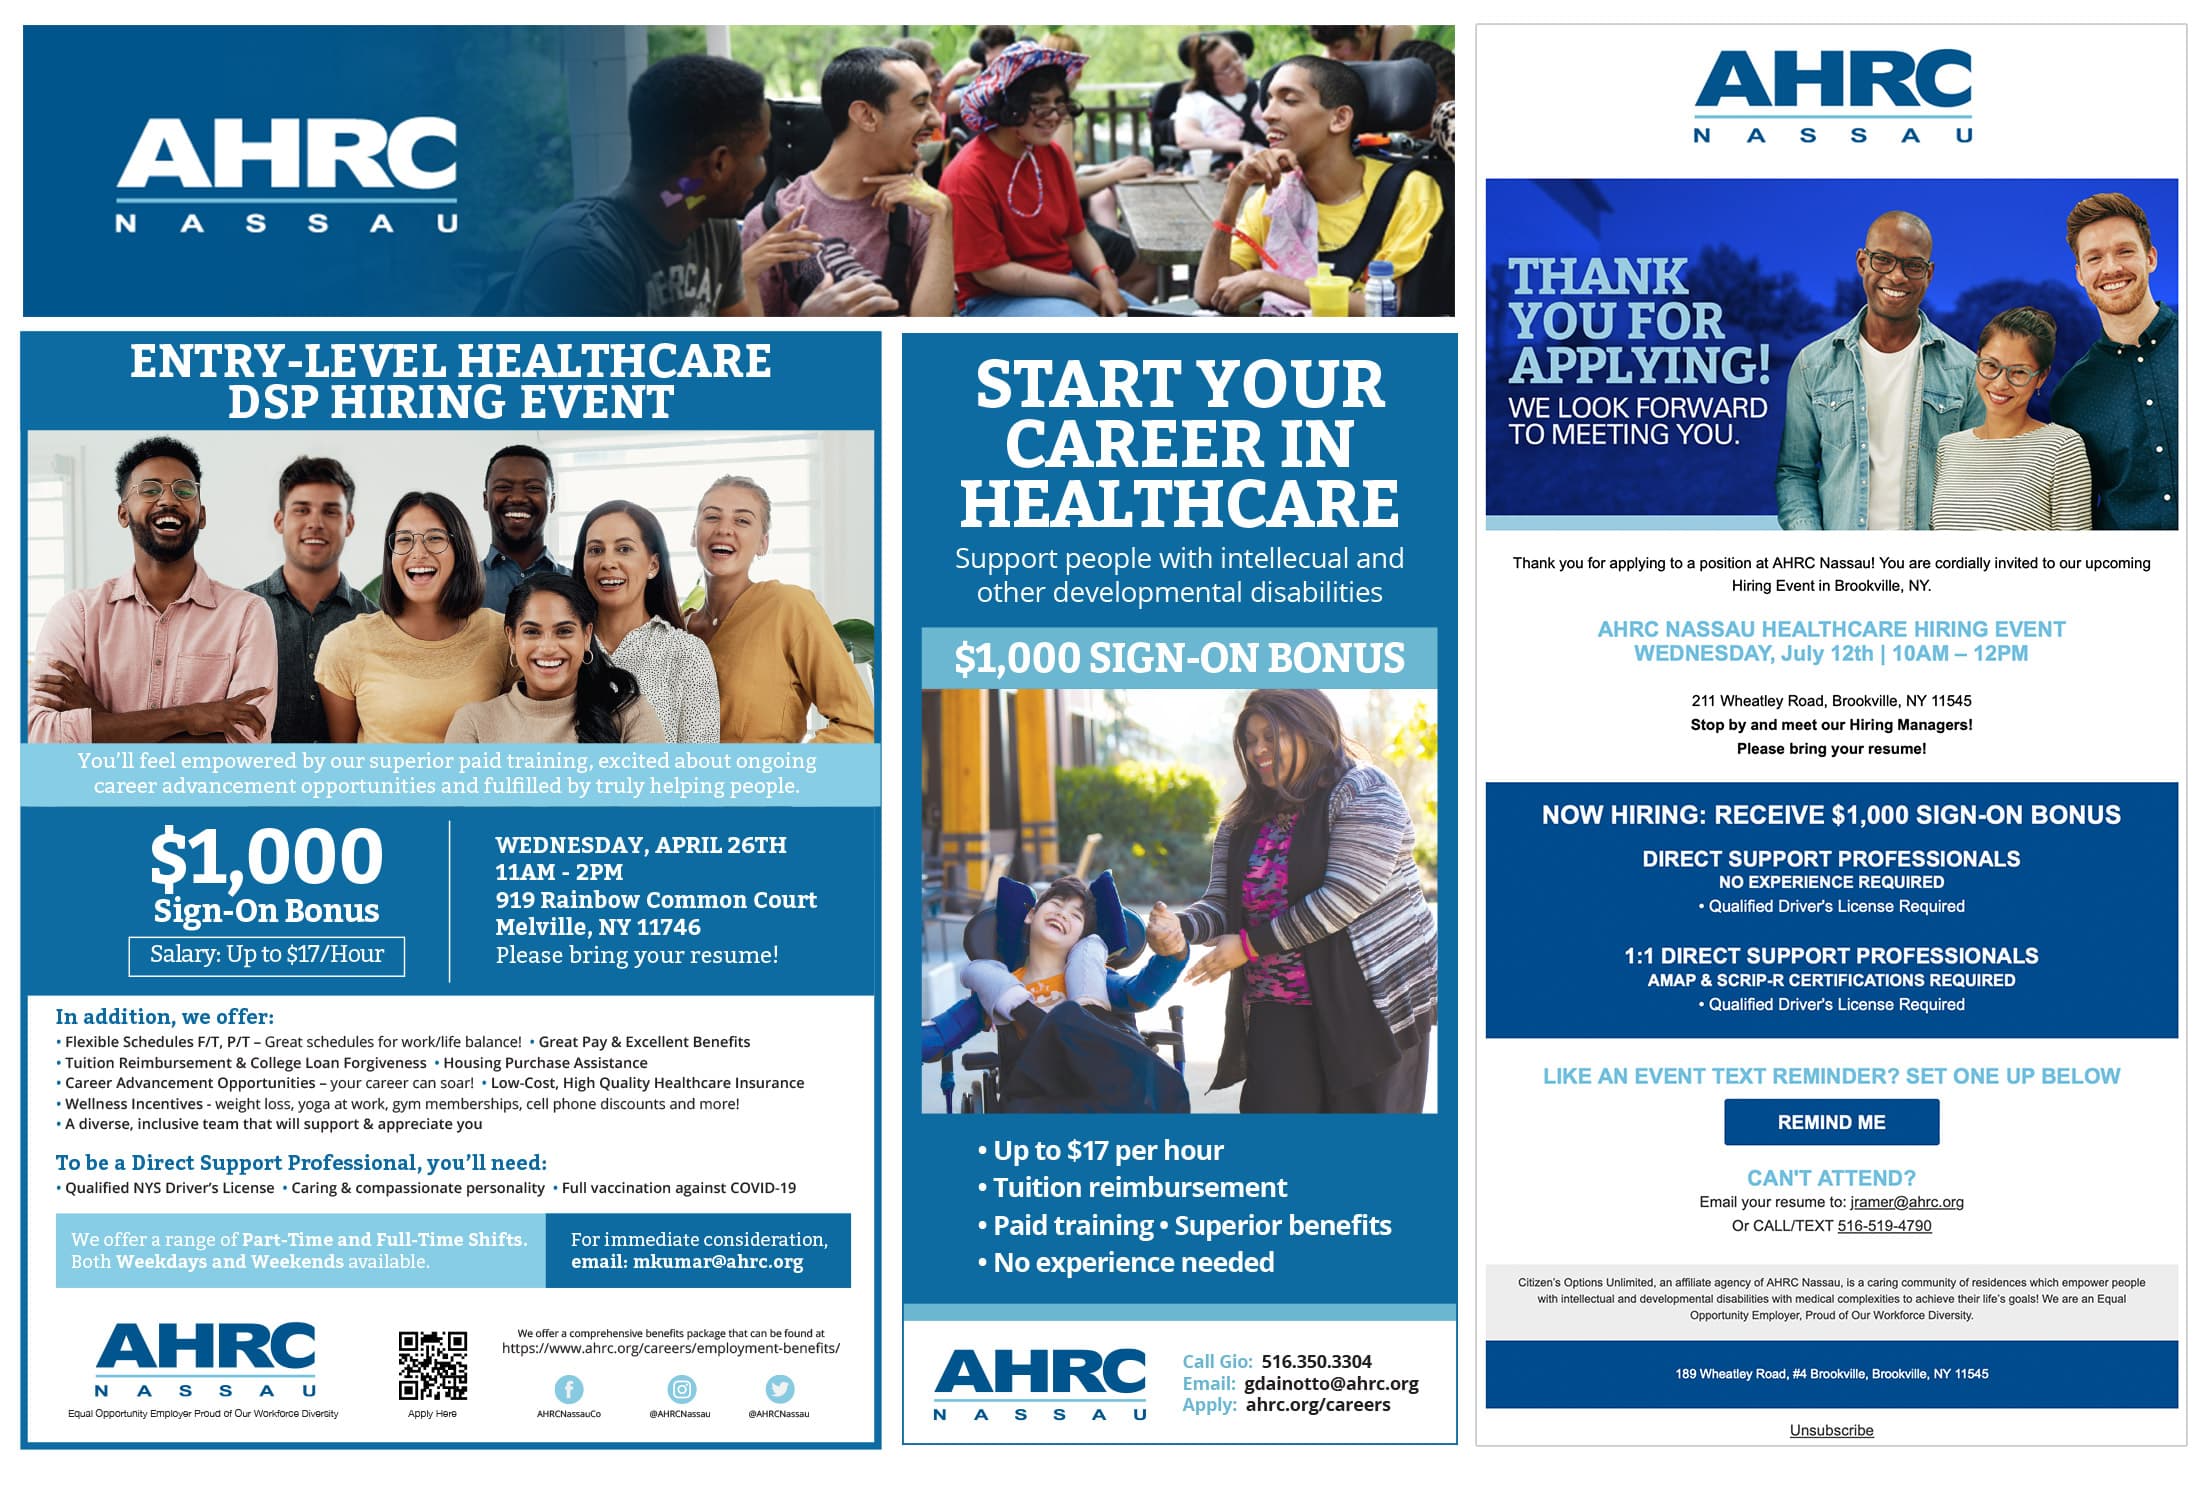 AHRC Employer Branding